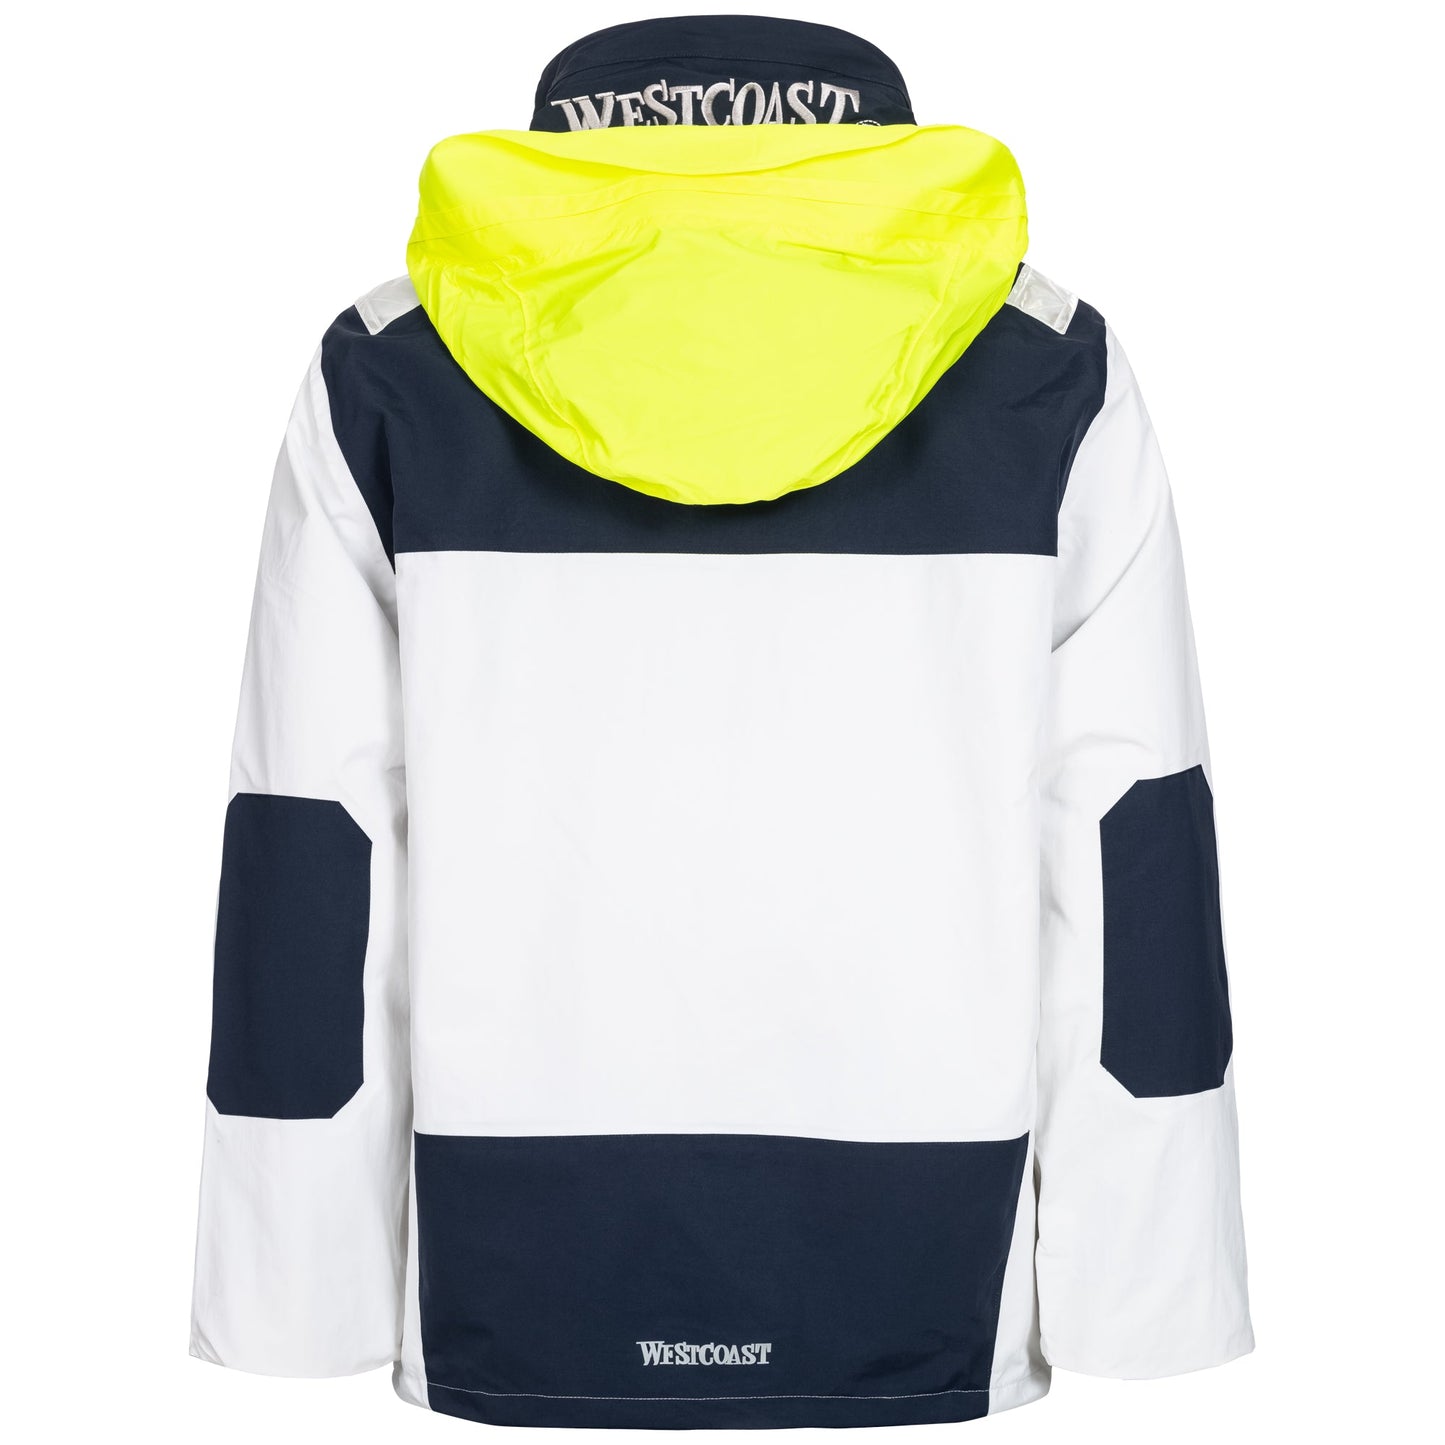 WESTCOAST Men's Foul Weather Gear COASTAL Jacket - WESTCOAST Swedish Sailingwear